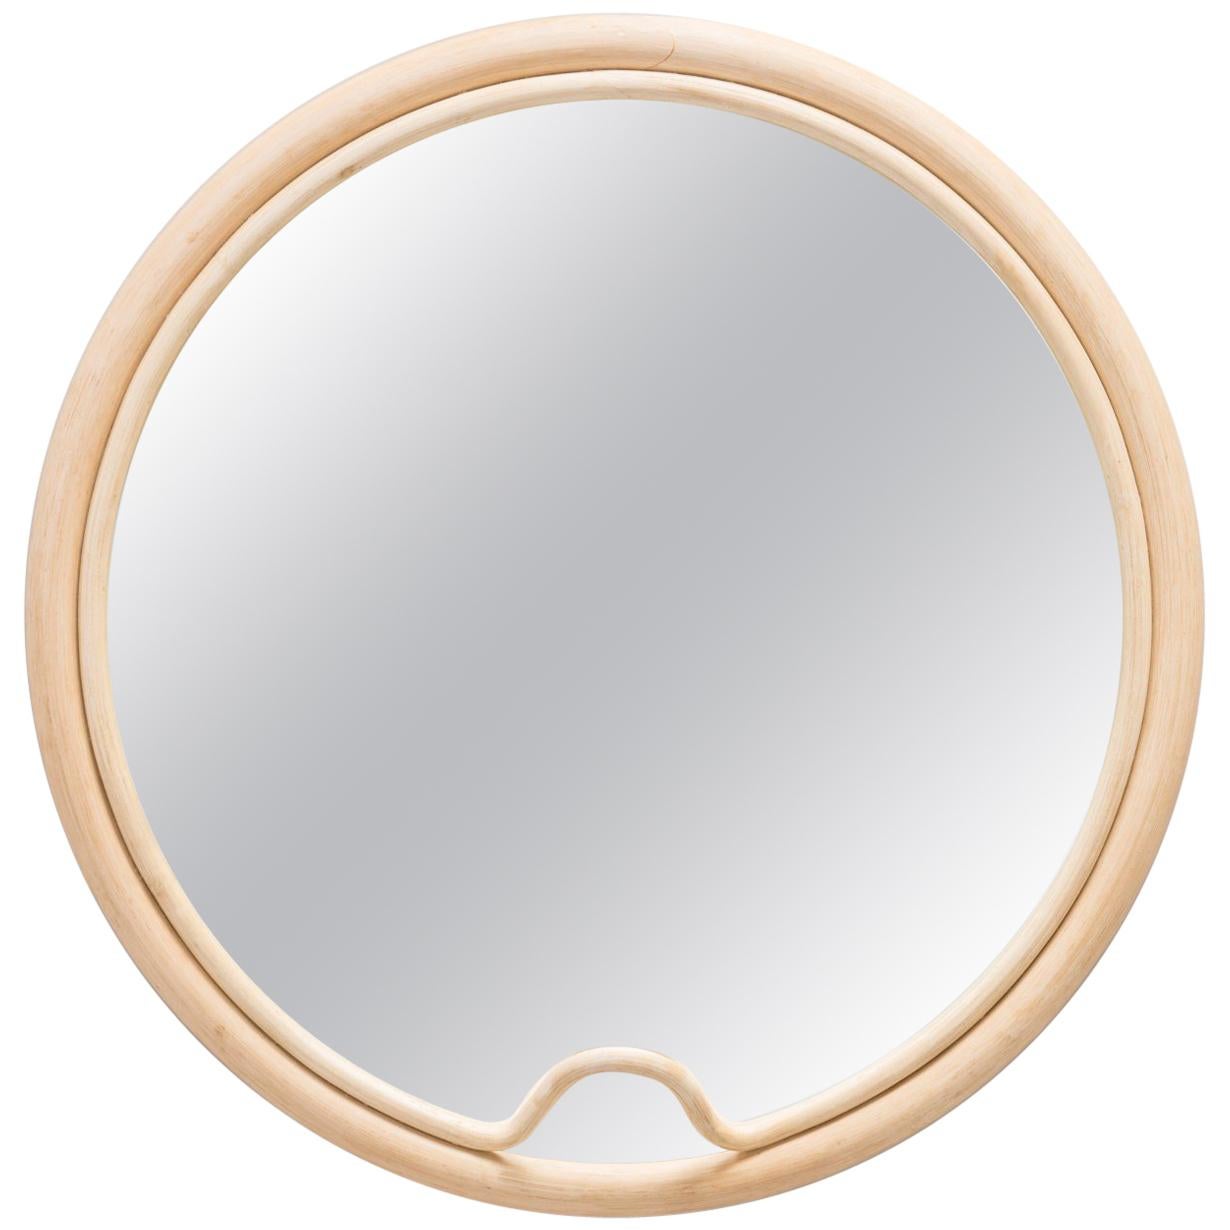 French Design Rattan Mirror